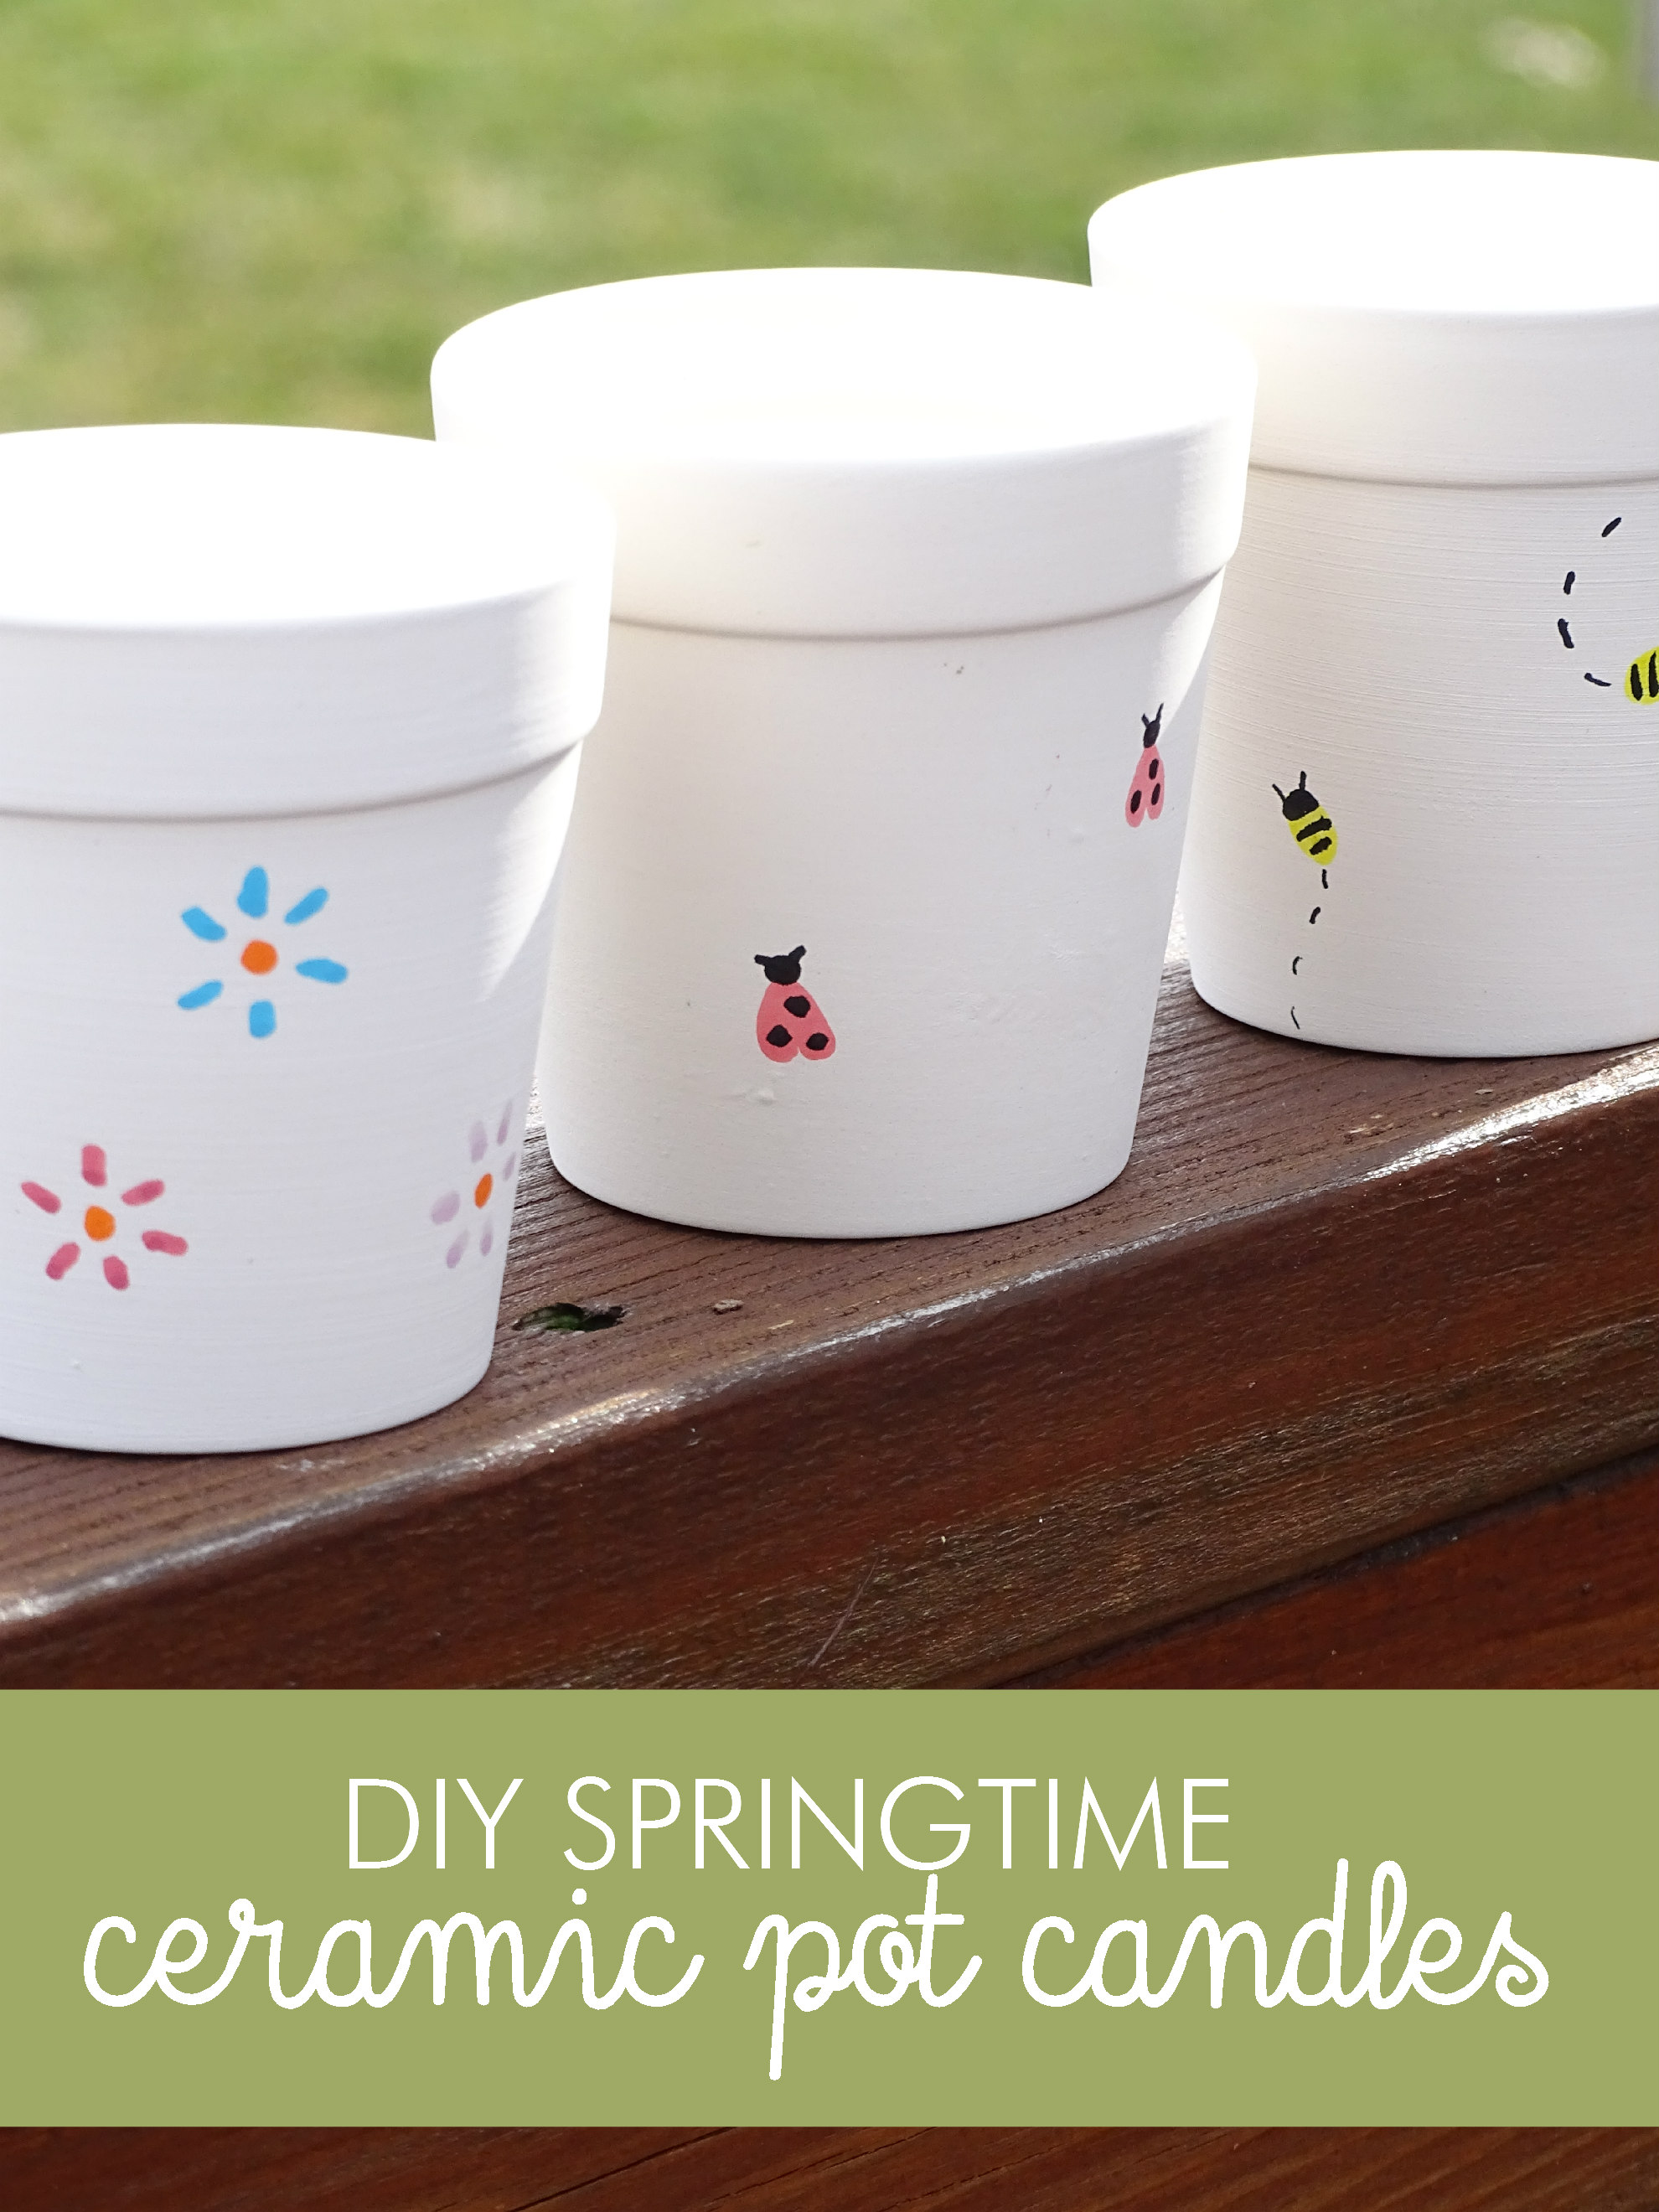 DIY Springtime Ceramic Pot Candles